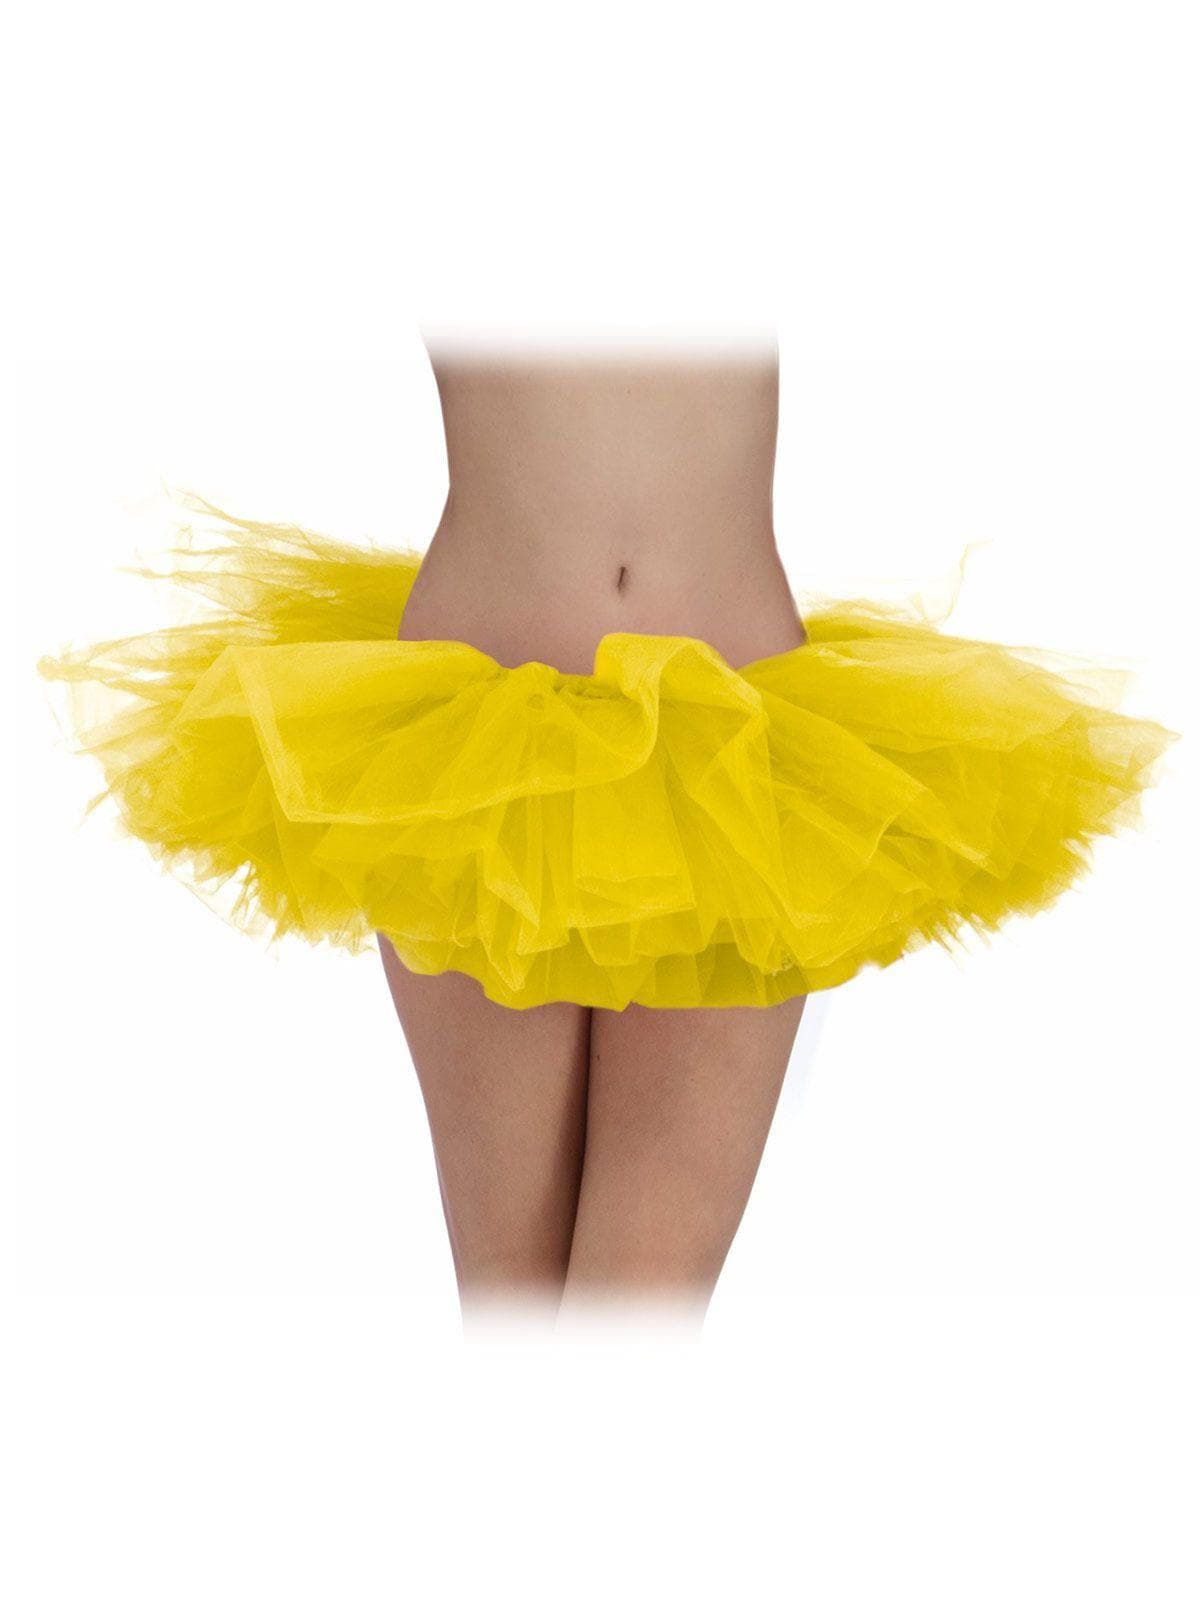 Yellow Tutu - costumes.com